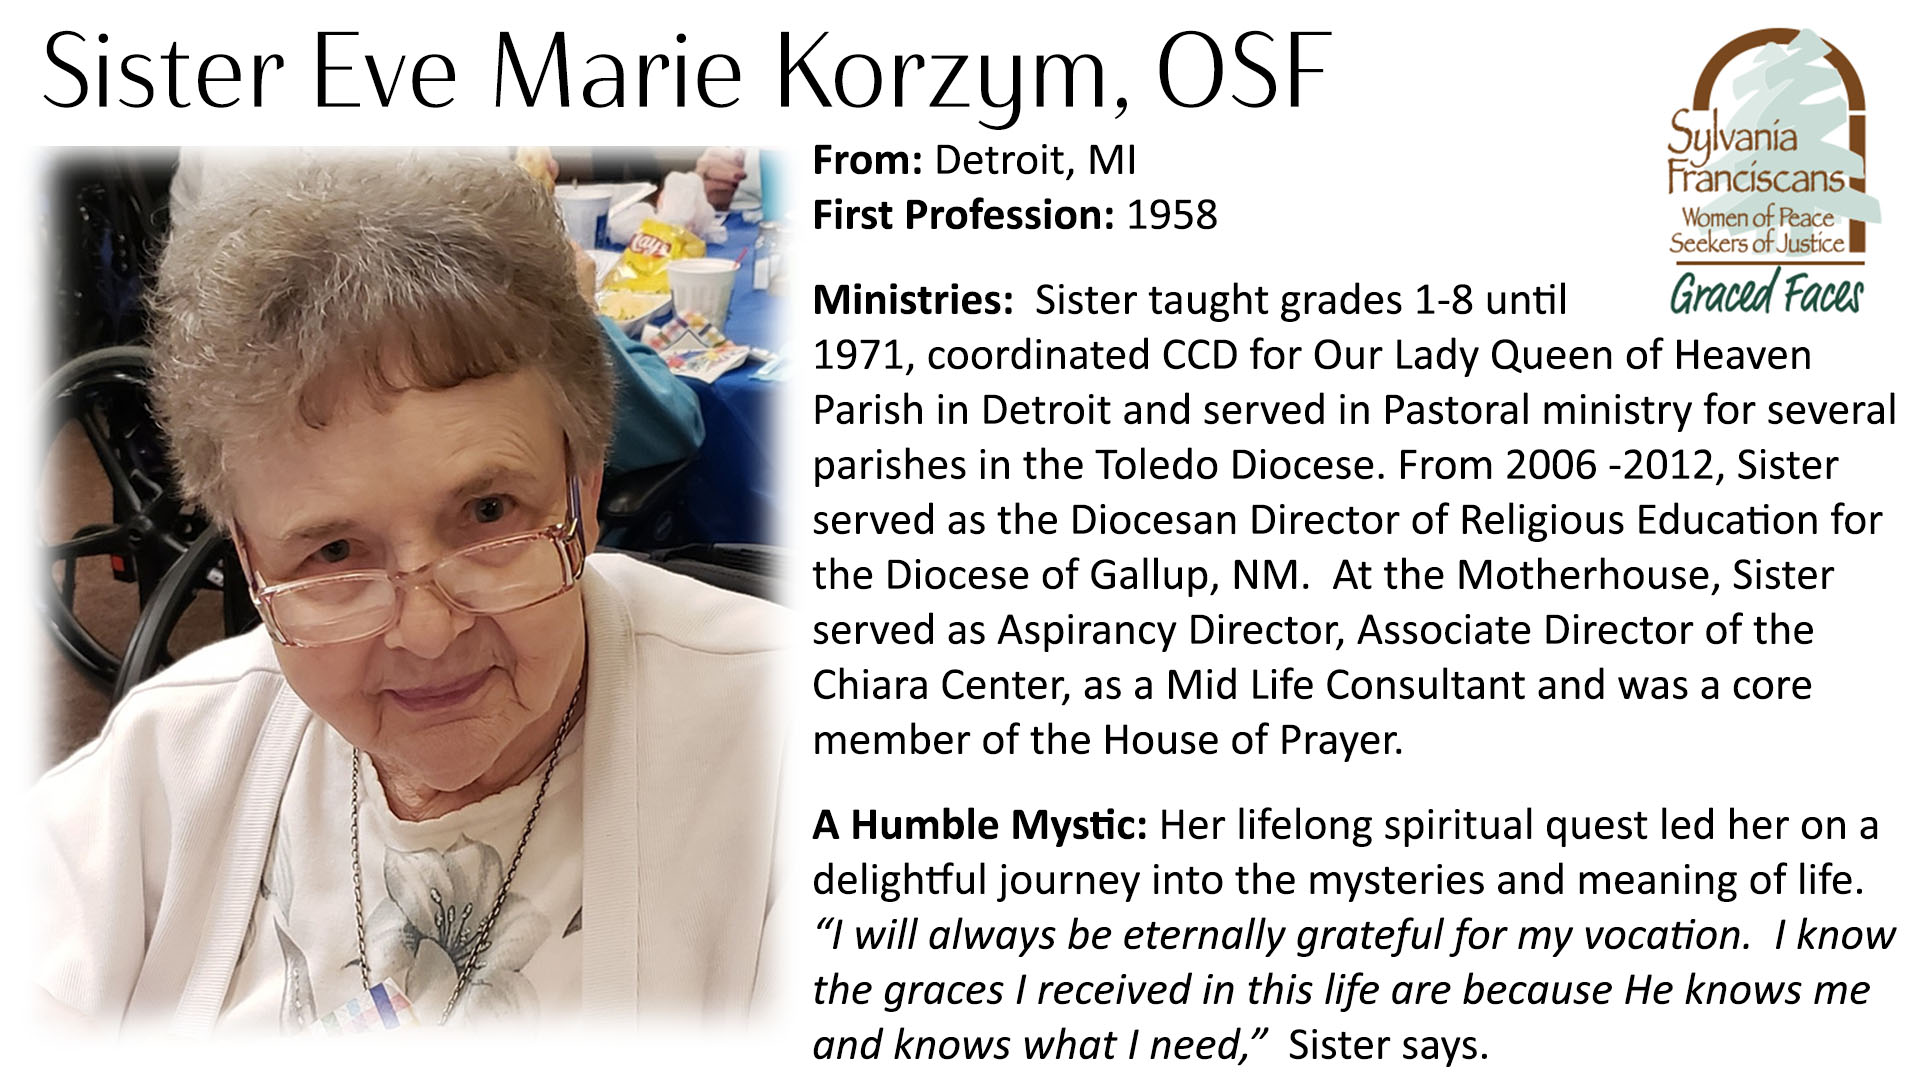 SIster Eve Marie Korzym, OSF